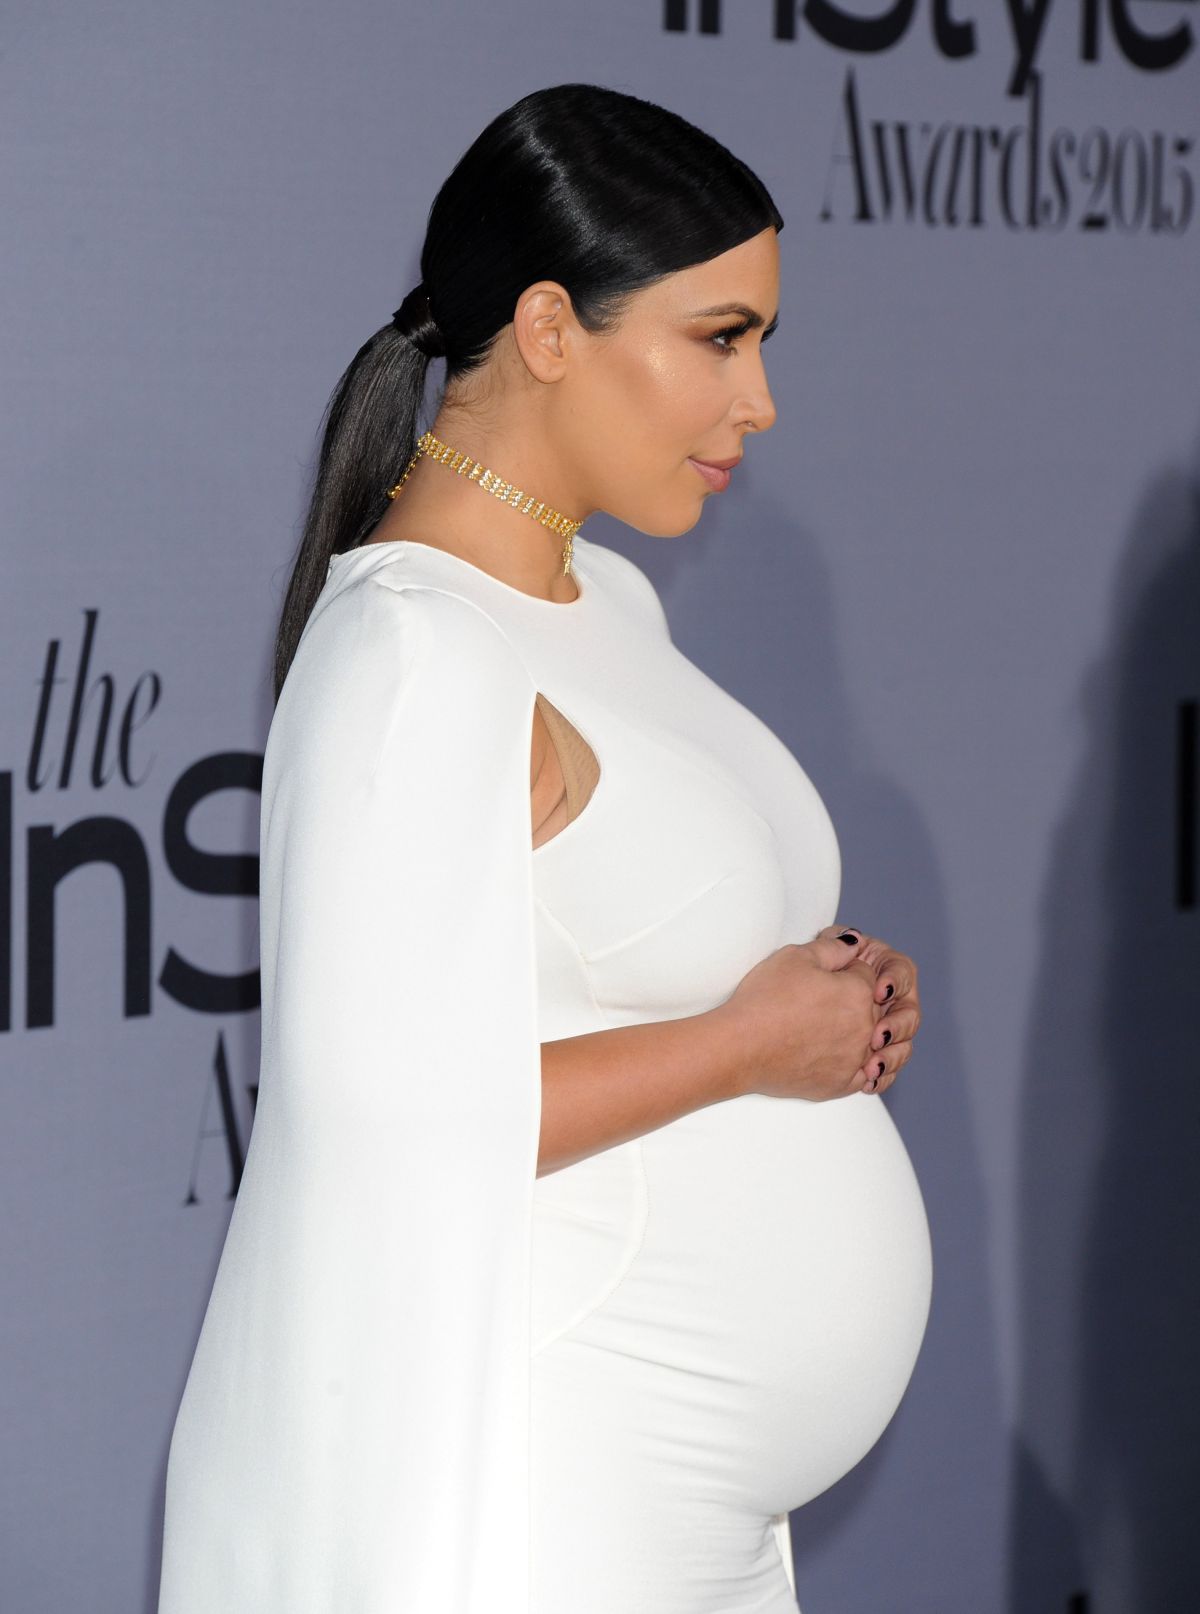 Pregnant Kim Kardashian At Instyle Awards 2015 In Los Angeles 10 26 2015 8 